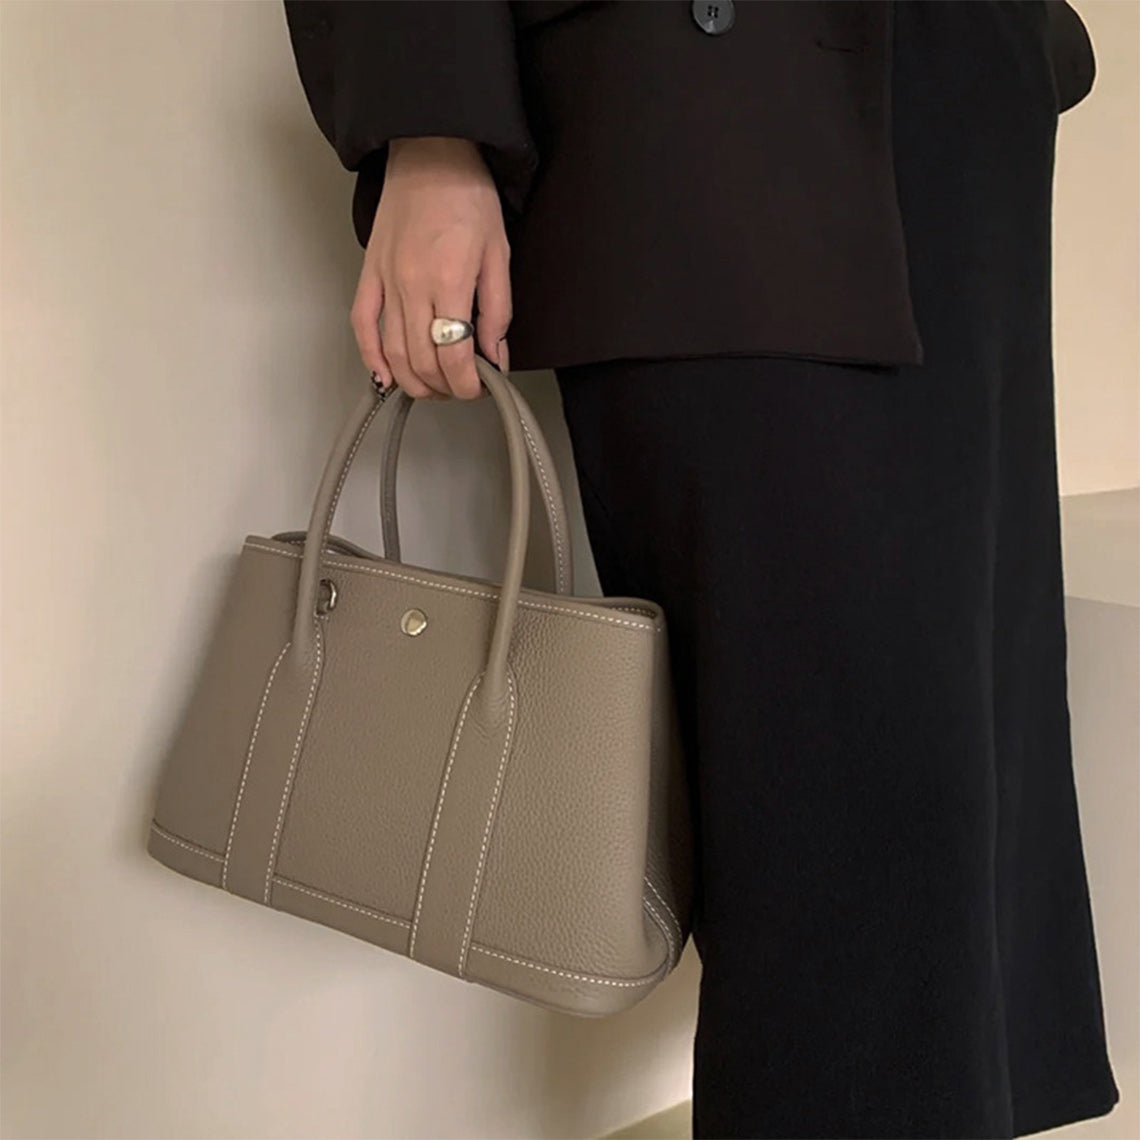 Luxury Handbag for Mom | Replica Luxury Handbag in Real Leather - POPSEWING™